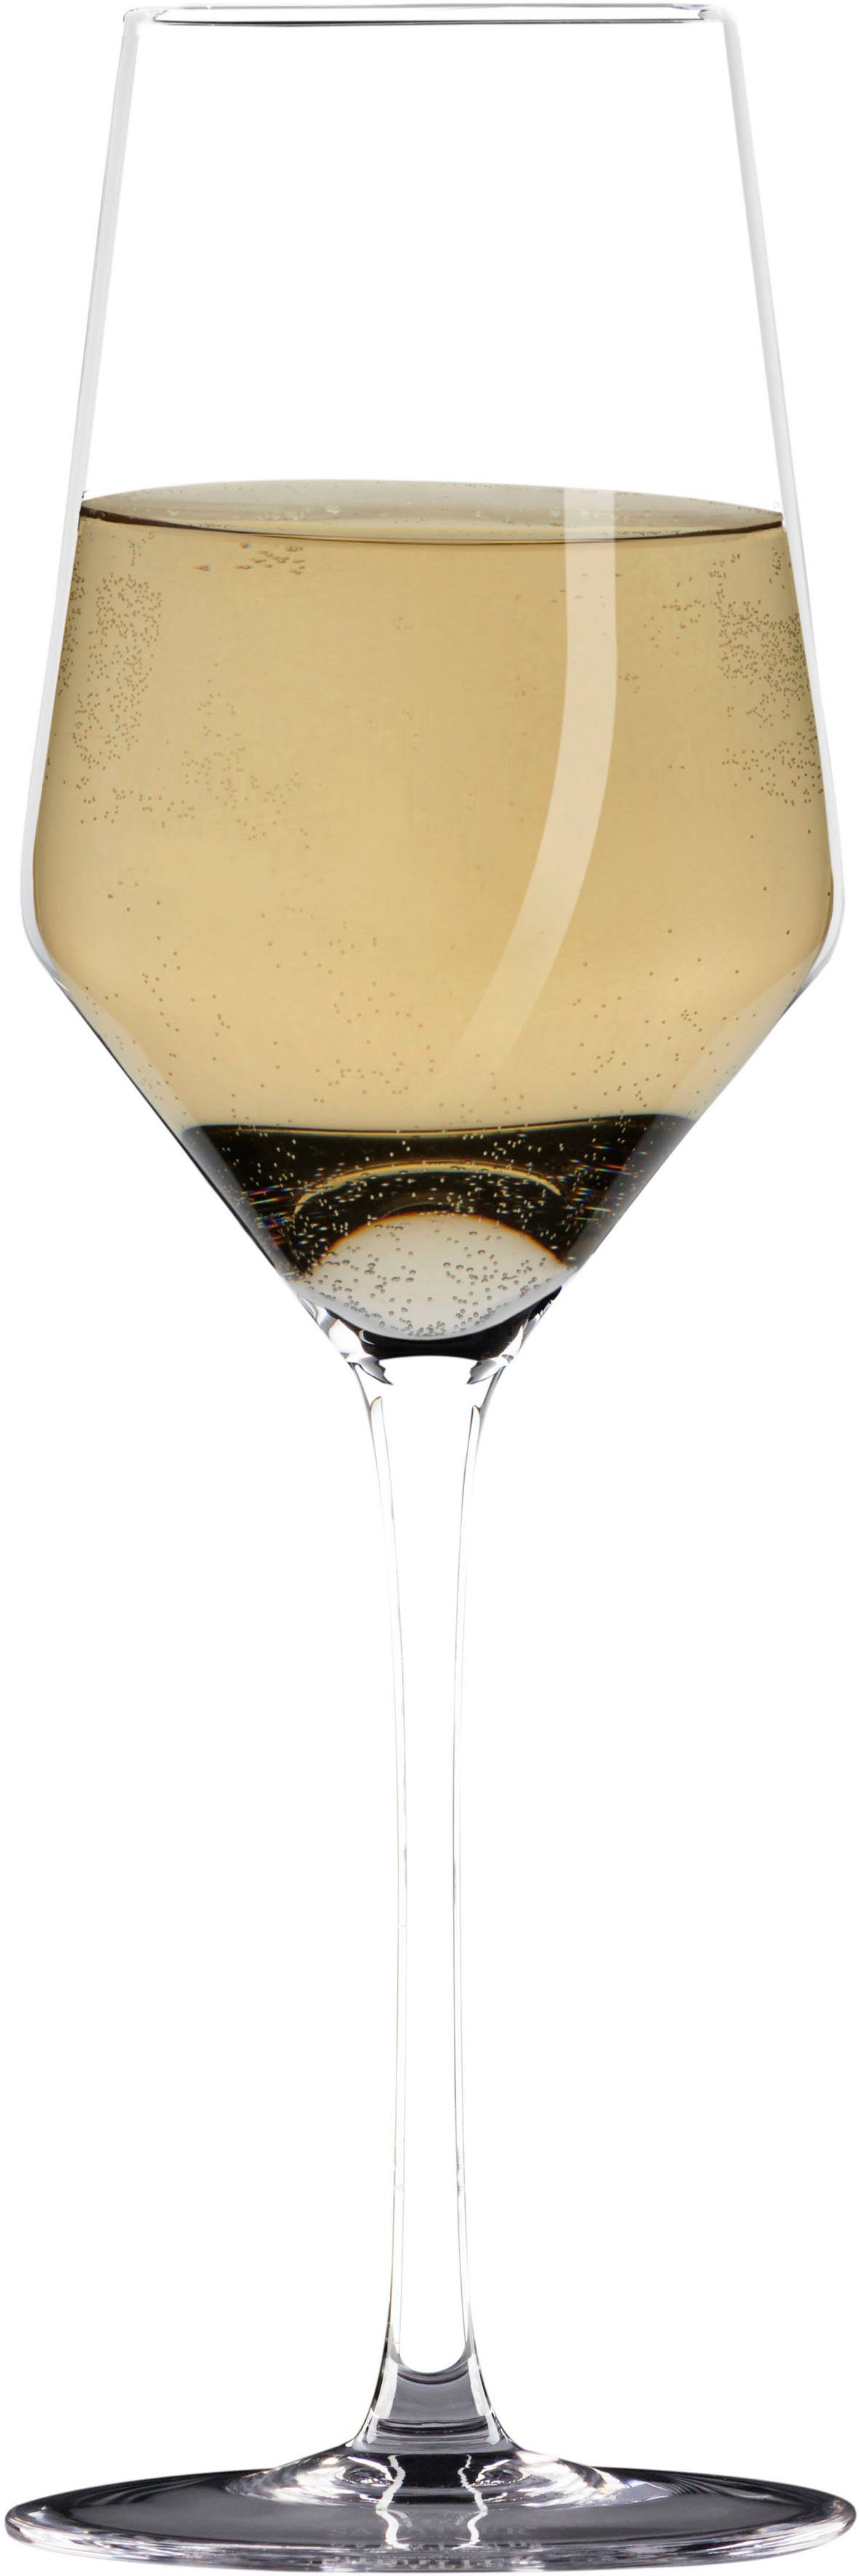 SABATIER International Weißweinglas, Kristallglas, Inhalt 0,4 L, 2-teilig